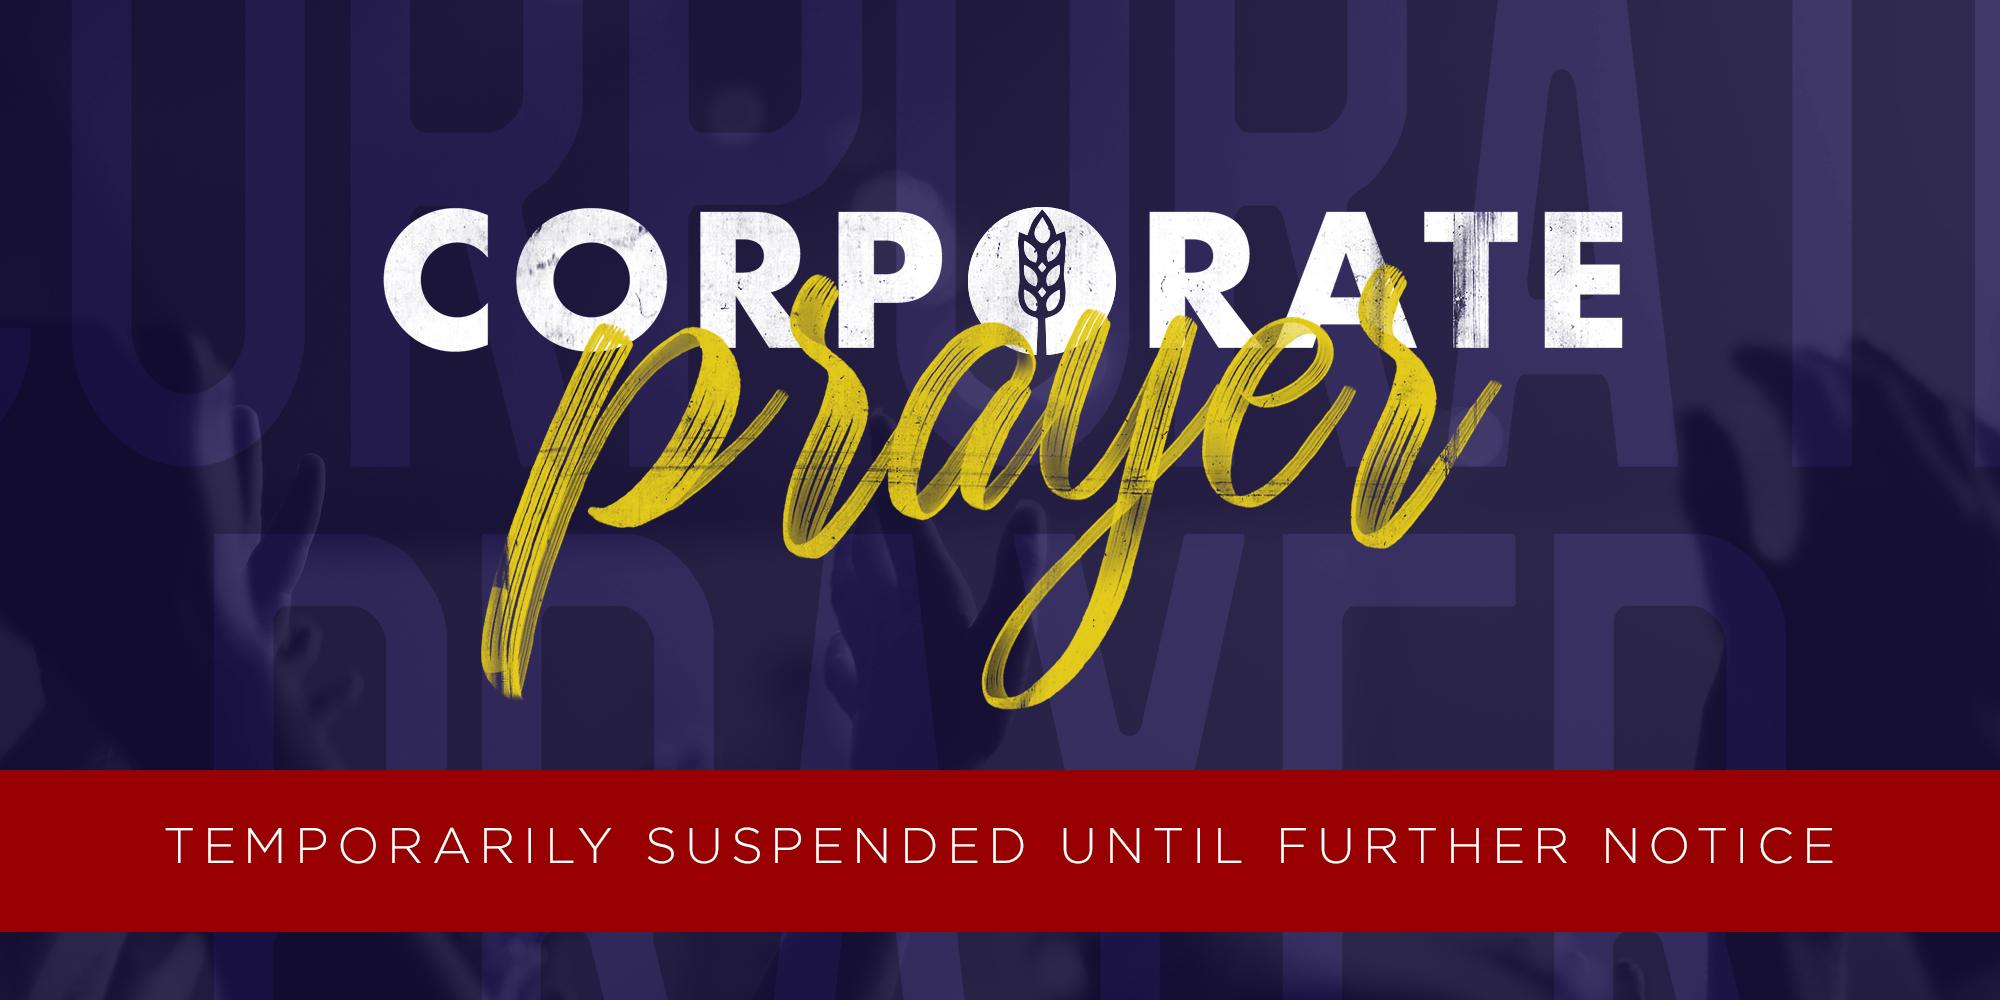 Corporate Prayer Suspended